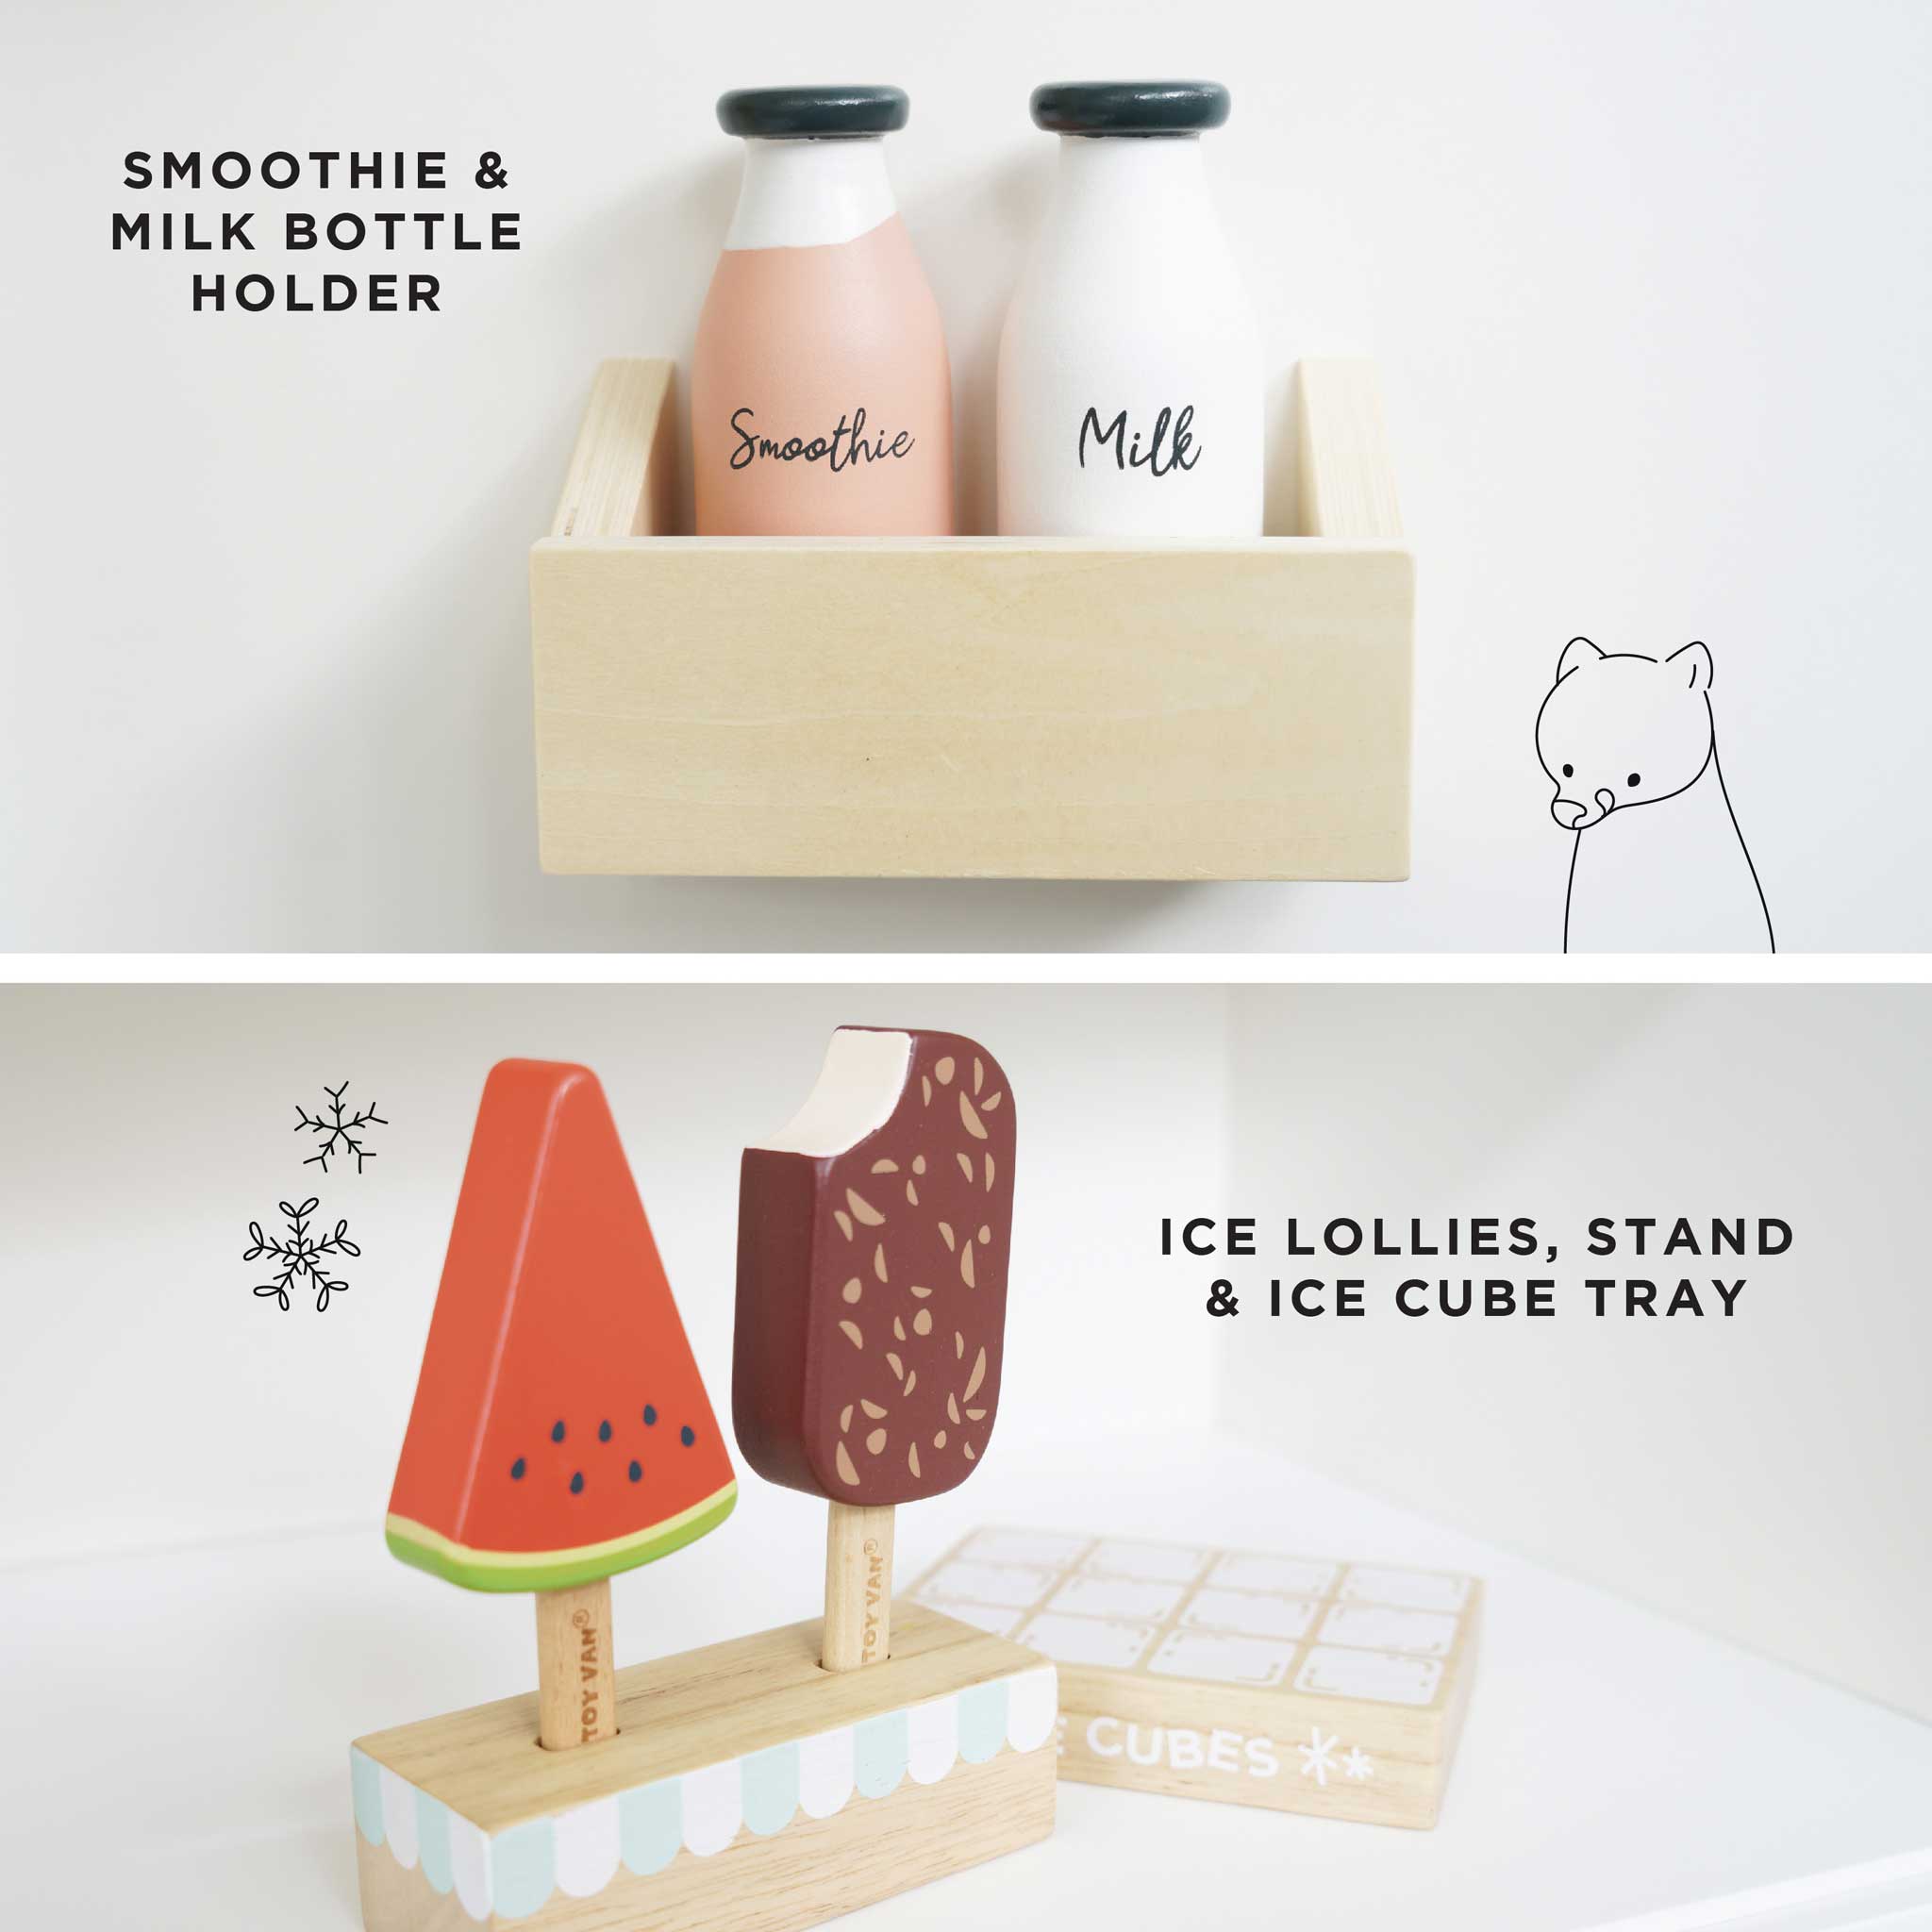 TV348-fridge-freezer-drink-bottles-ice-lollies-and-ice-tray